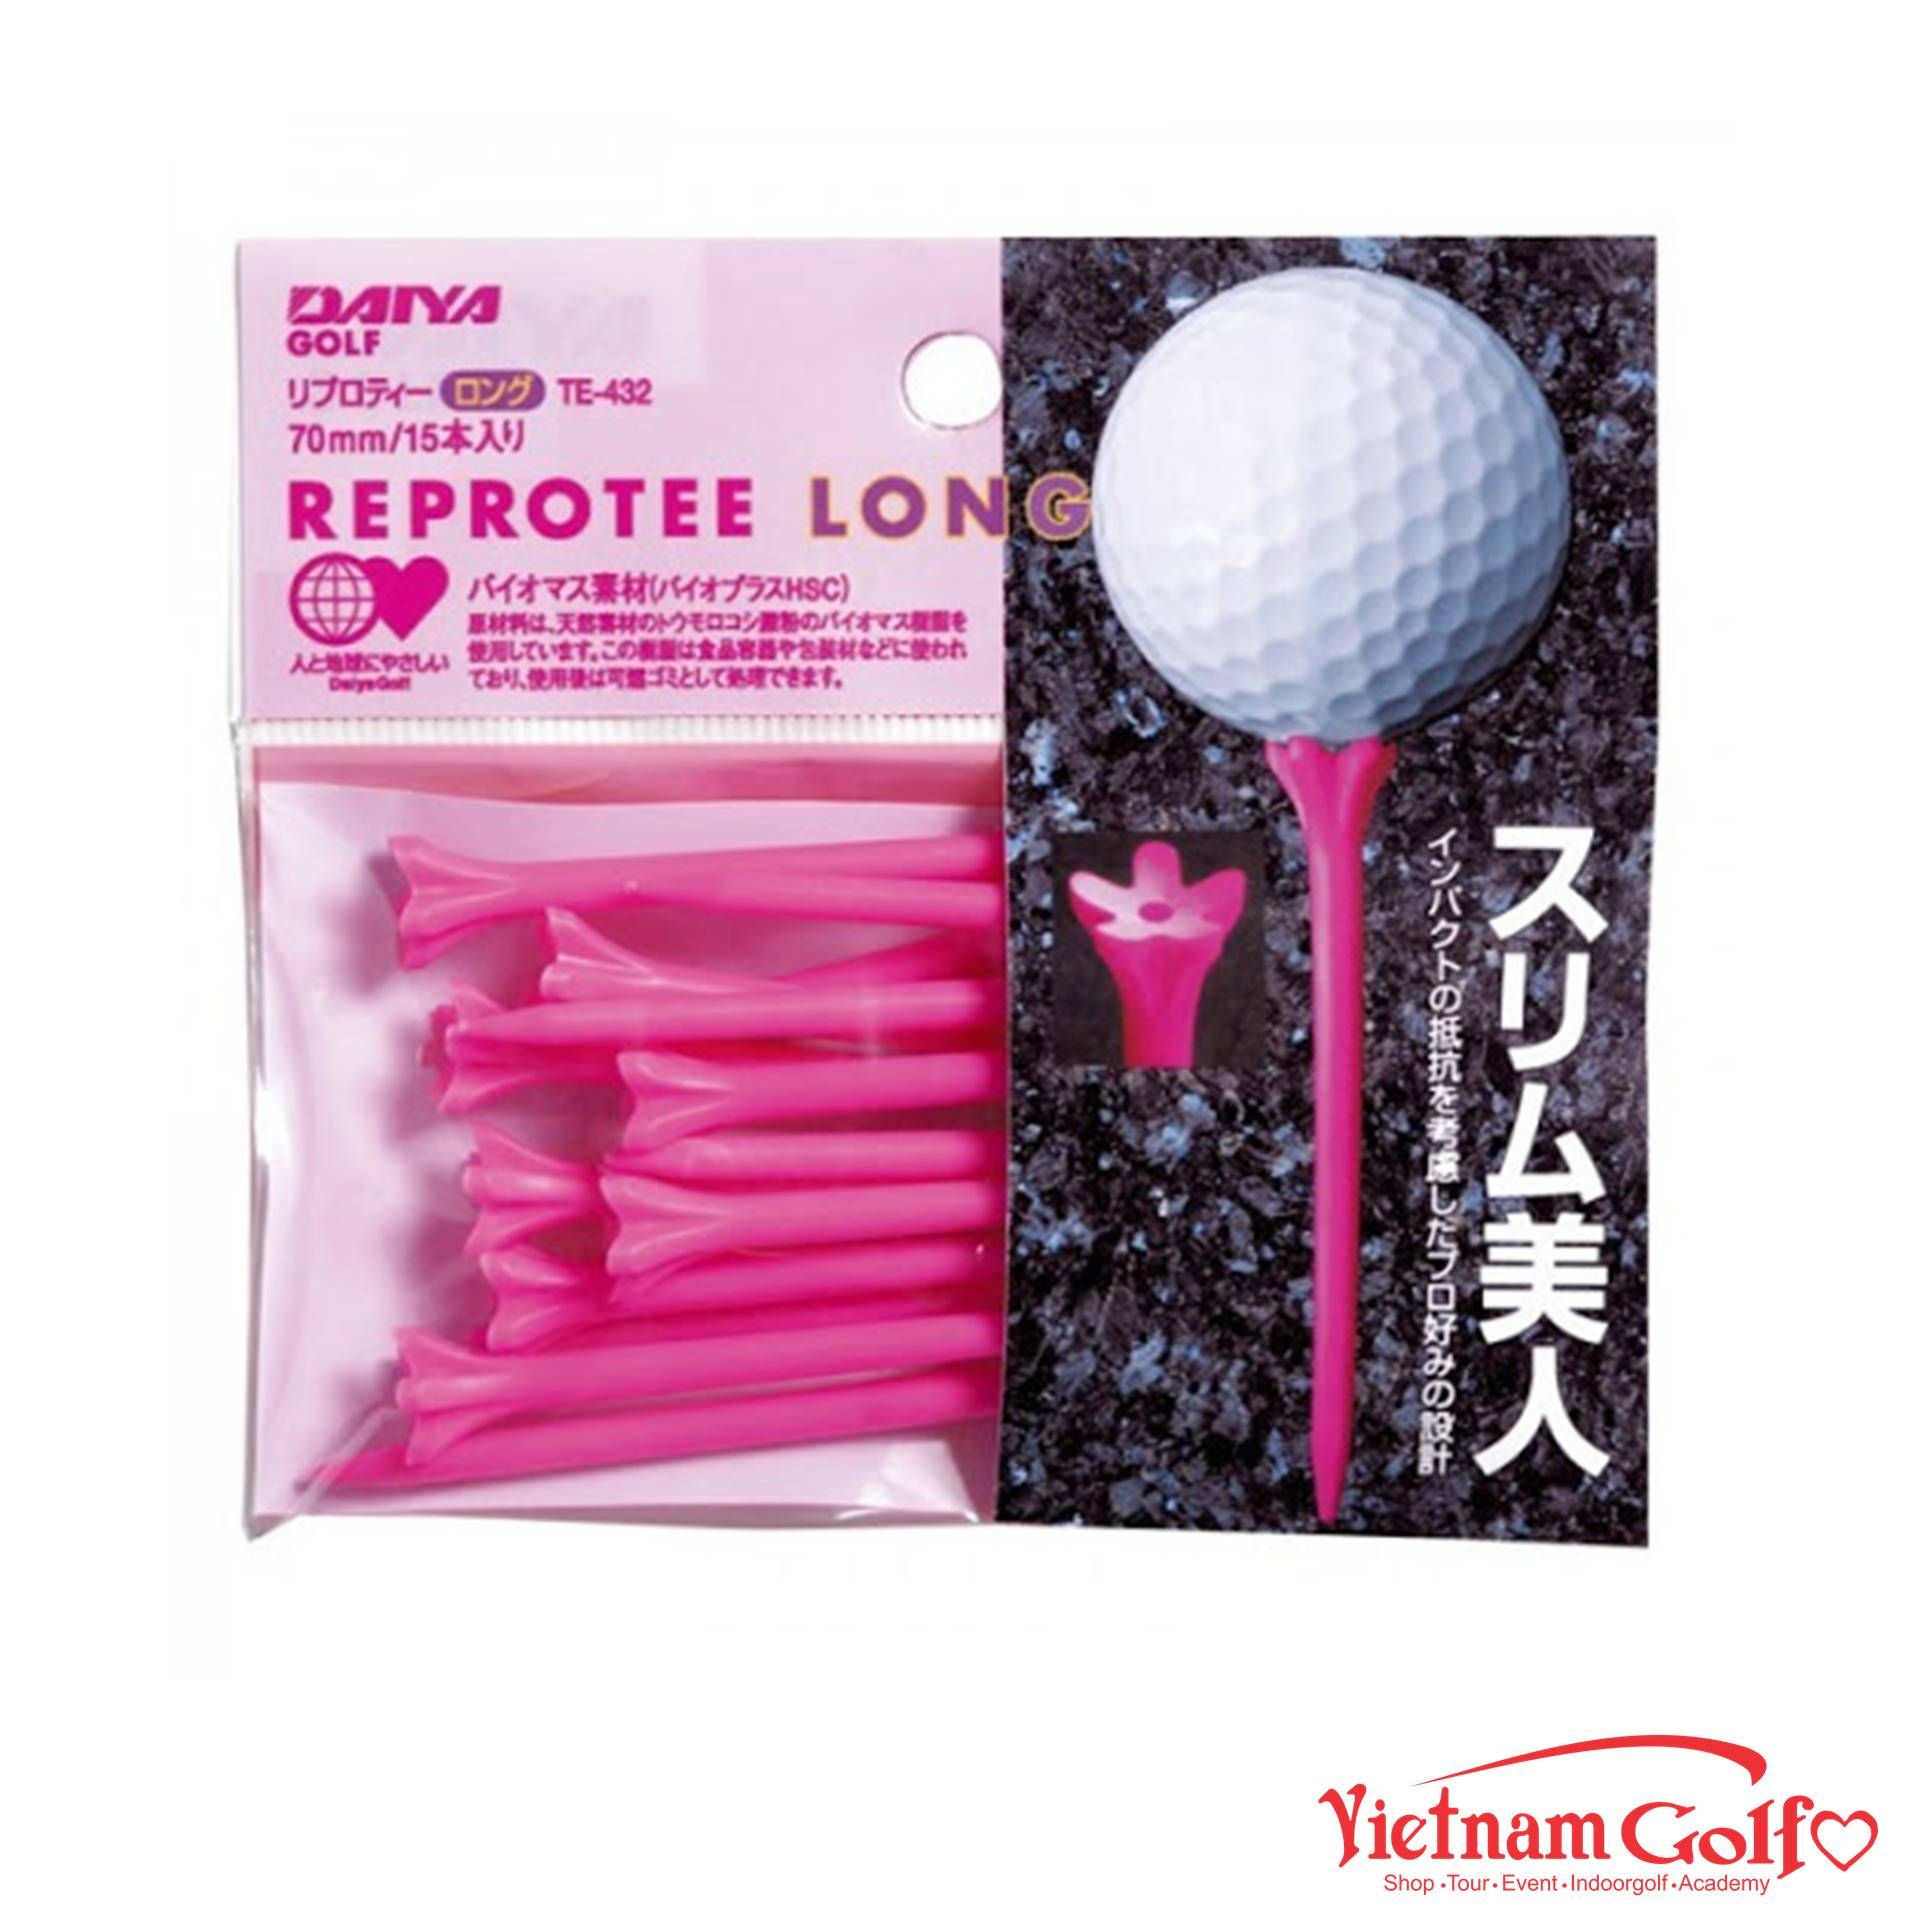 Tee Daiya Golf Repro